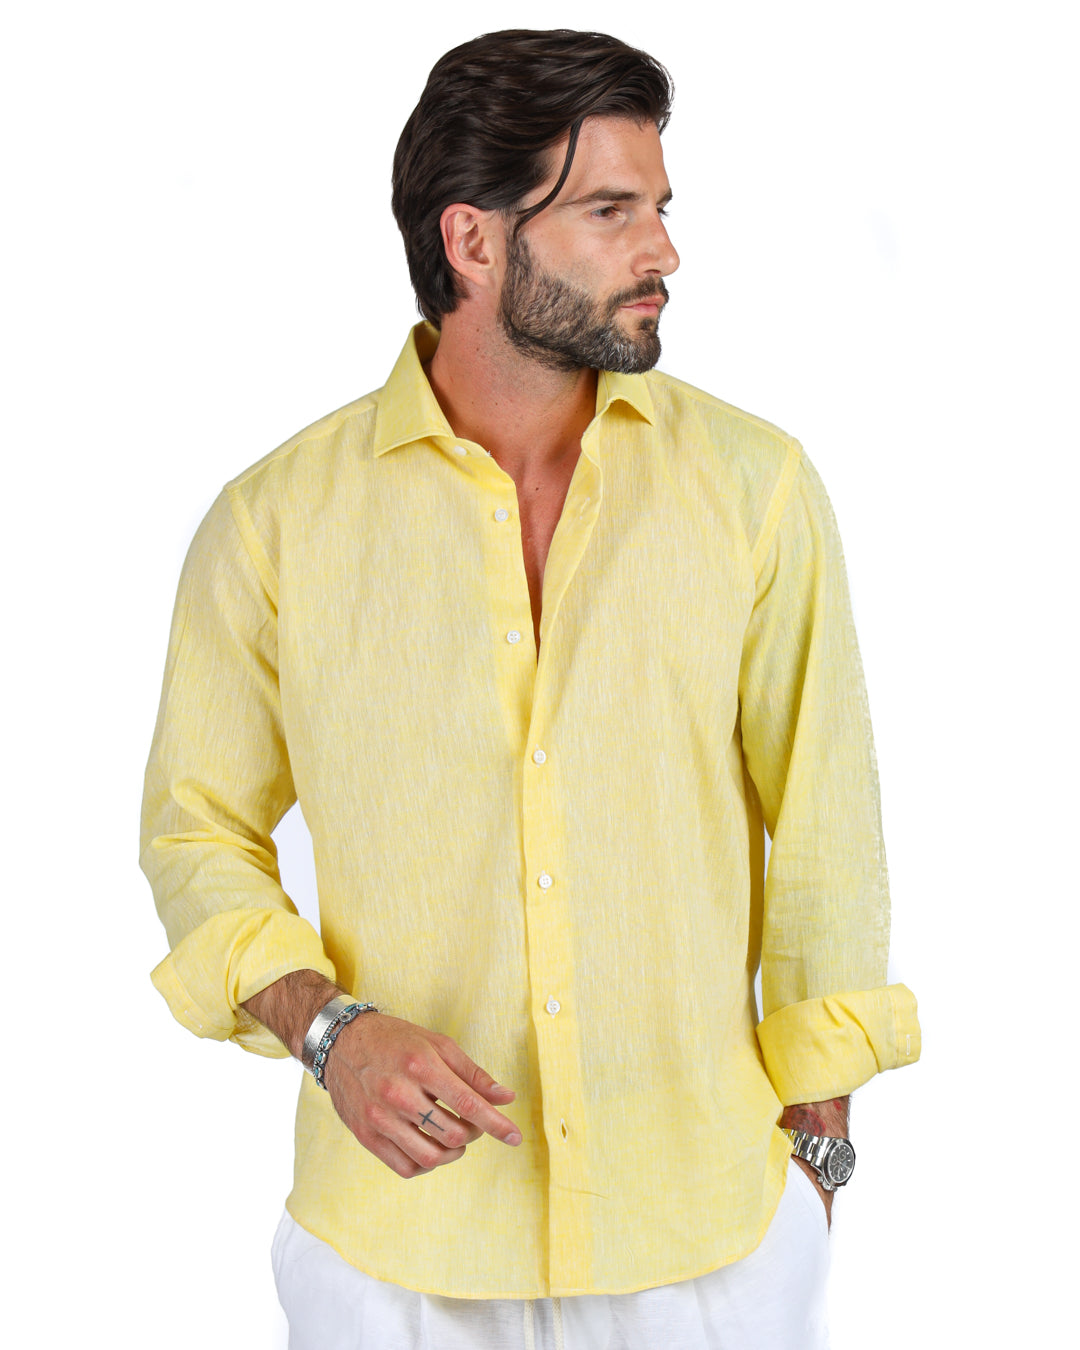 Praiano - Classic yellow linen shirt 